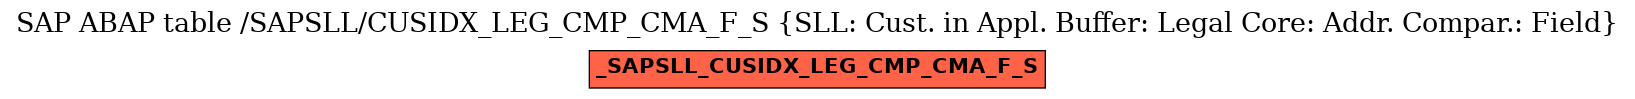 E-R Diagram for table /SAPSLL/CUSIDX_LEG_CMP_CMA_F_S (SLL: Cust. in Appl. Buffer: Legal Core: Addr. Compar.: Field)